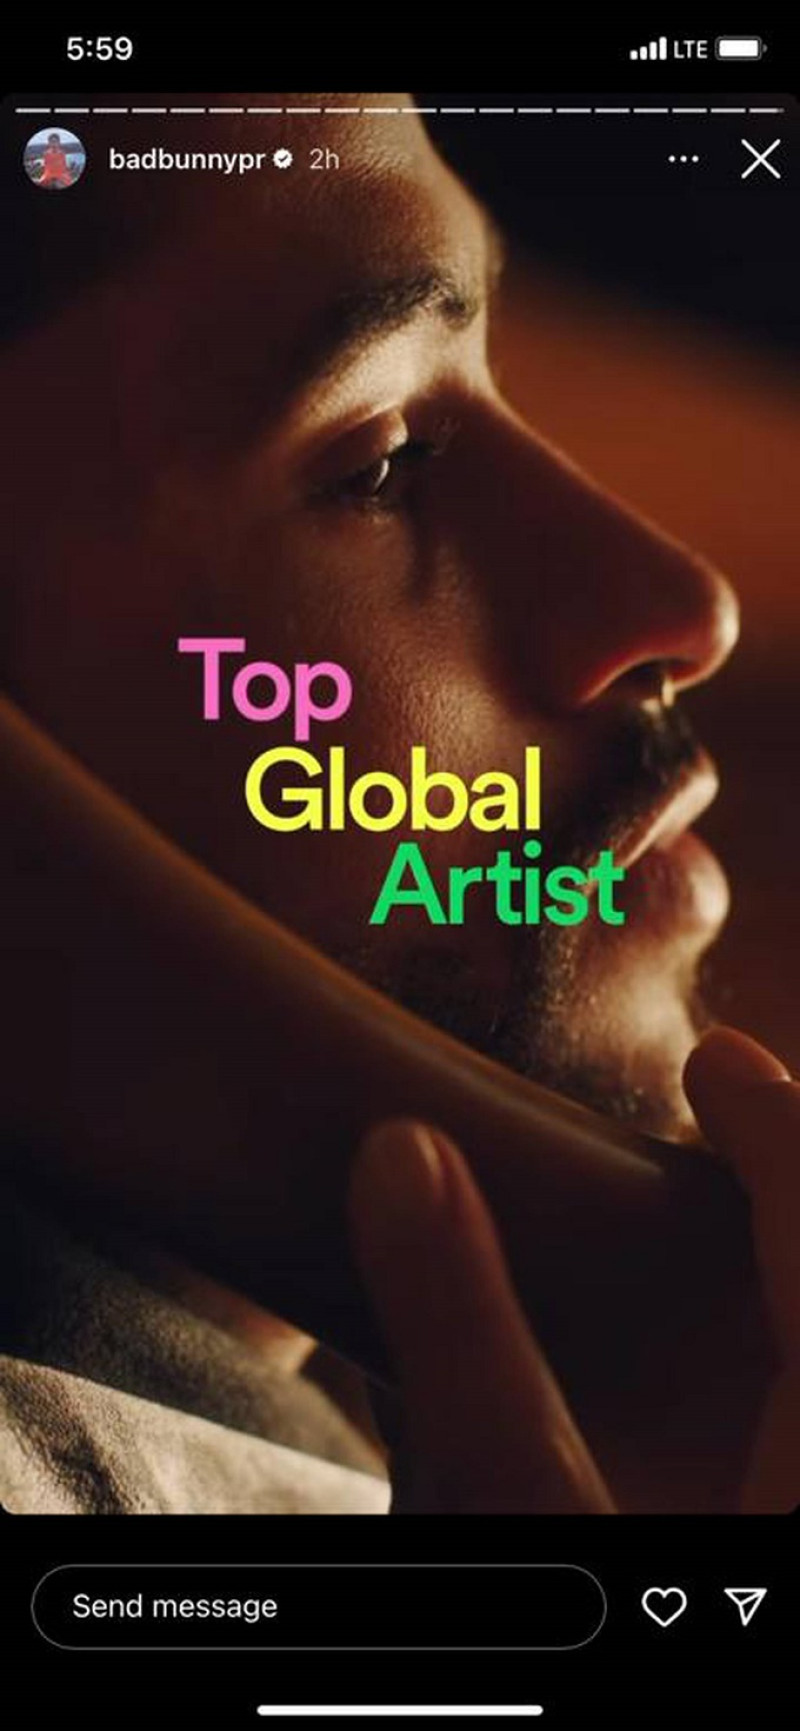 Hitou! Bad Bunny estreia Where She Goes no topo do Spotify Global